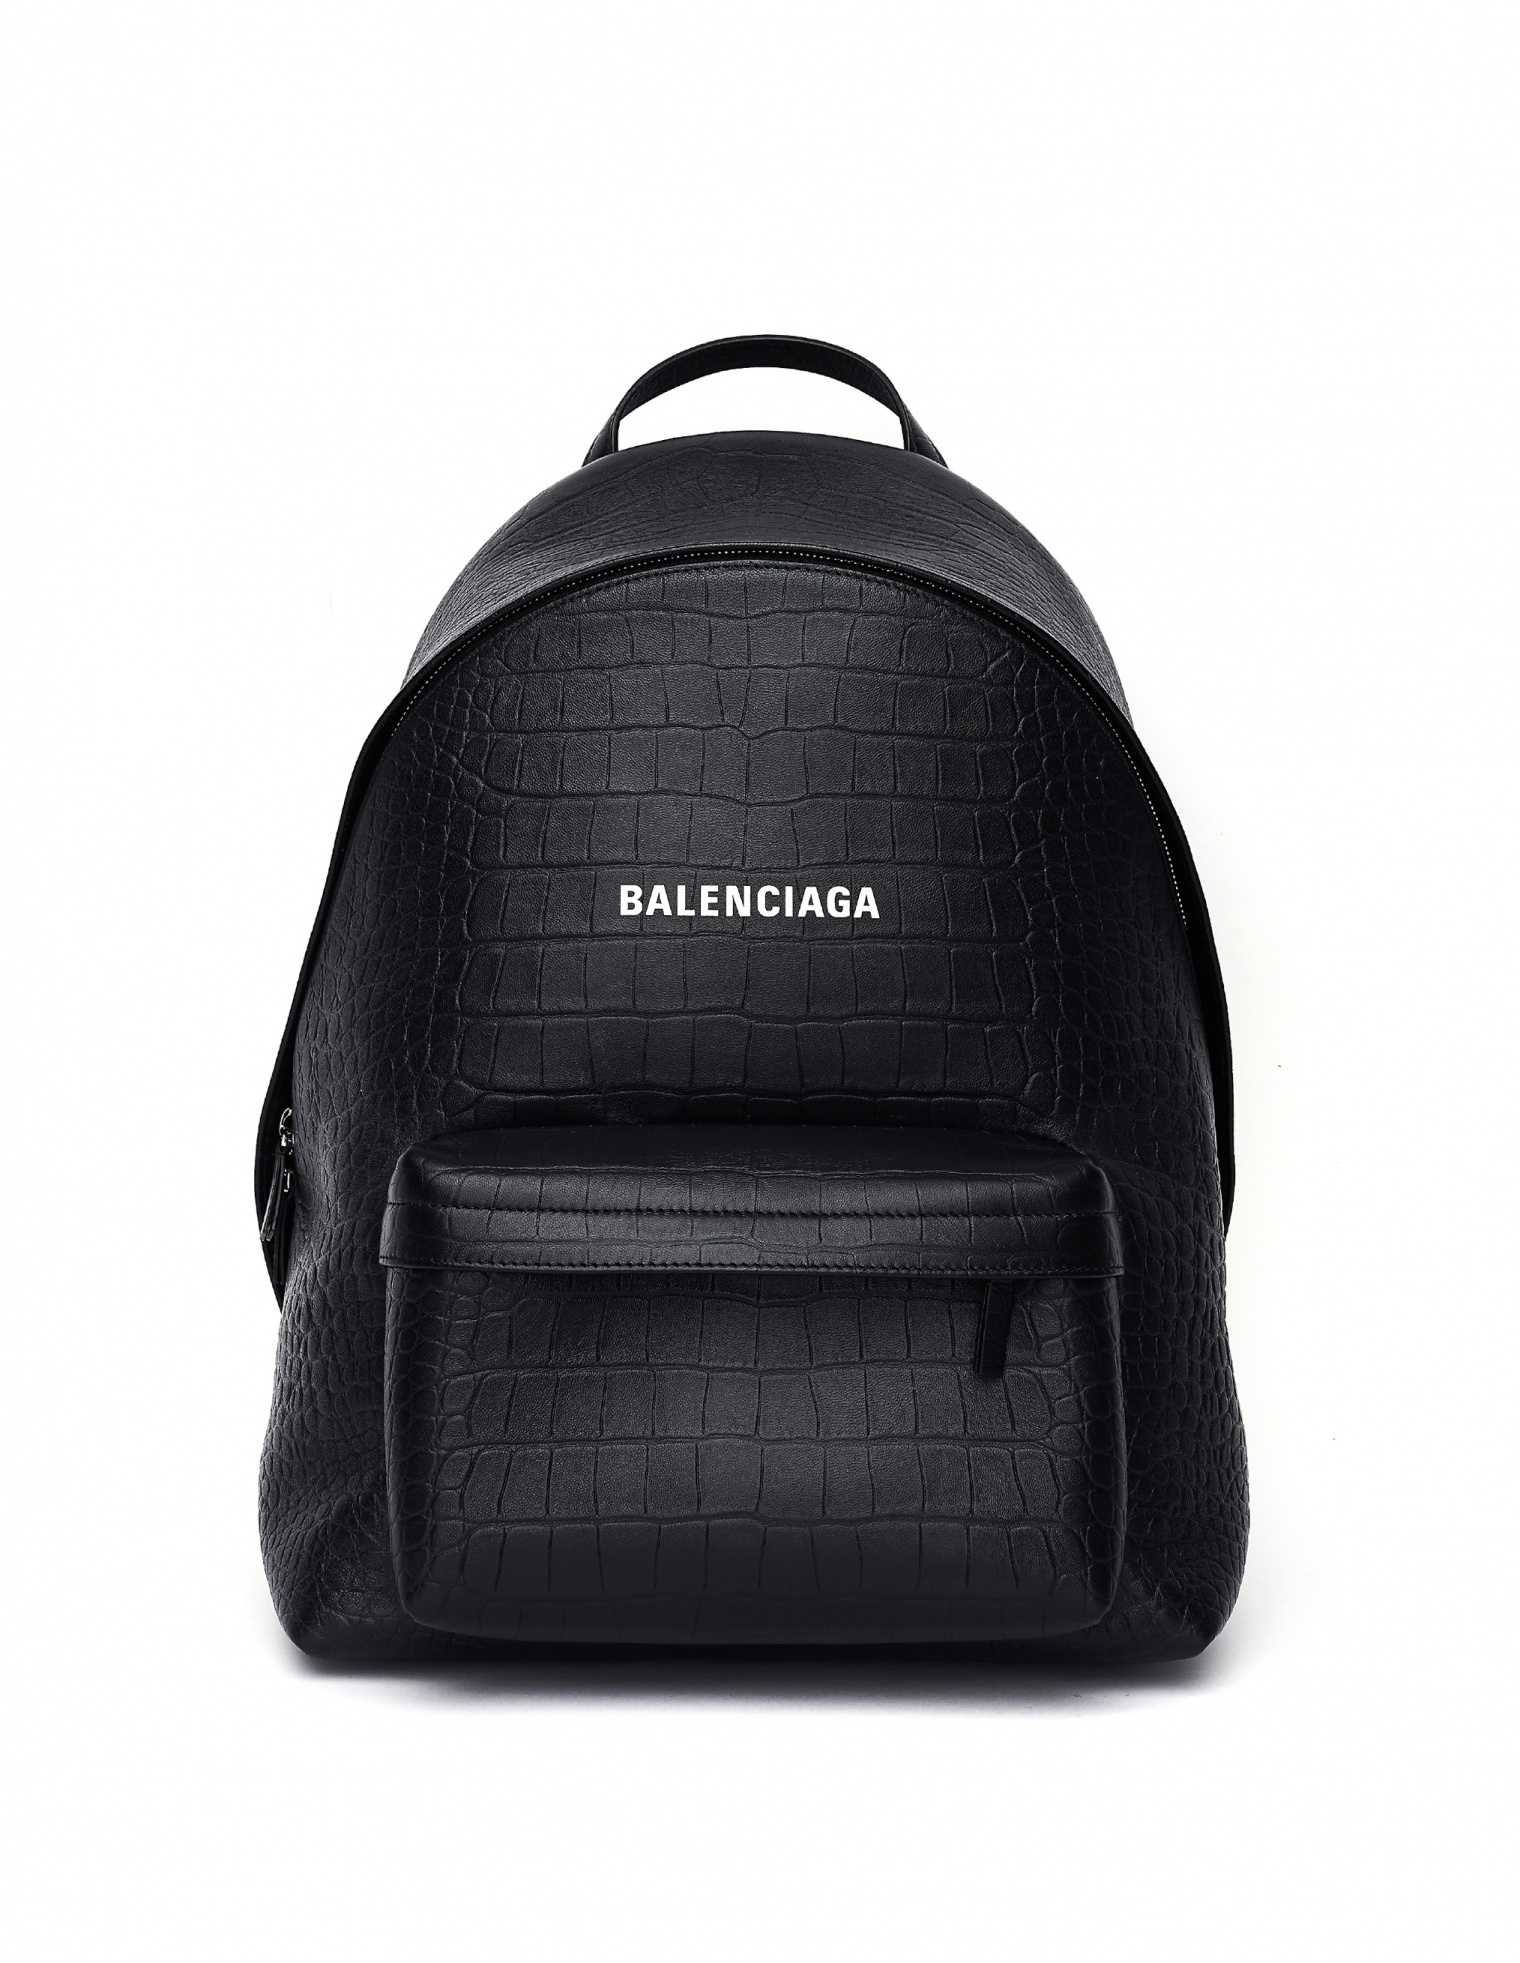 Balenciaga Black Leather Logo Printed Backpack